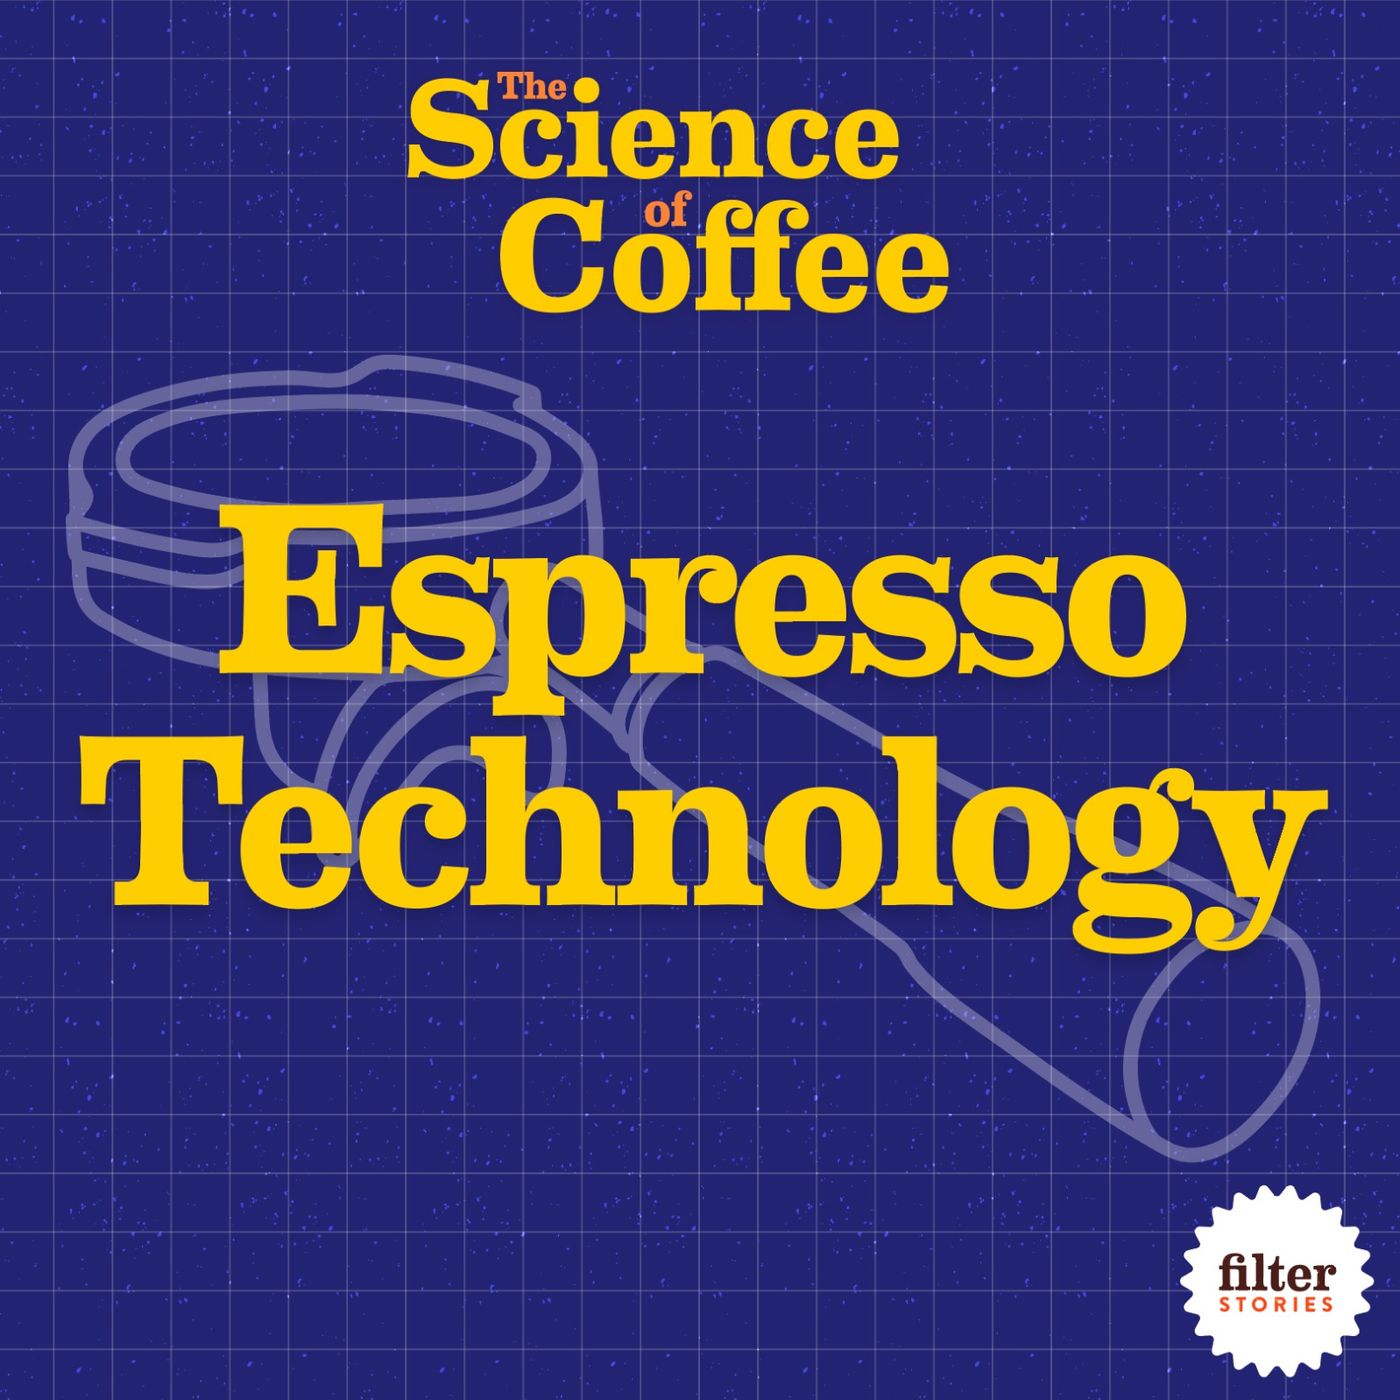 4) Espresso Technology